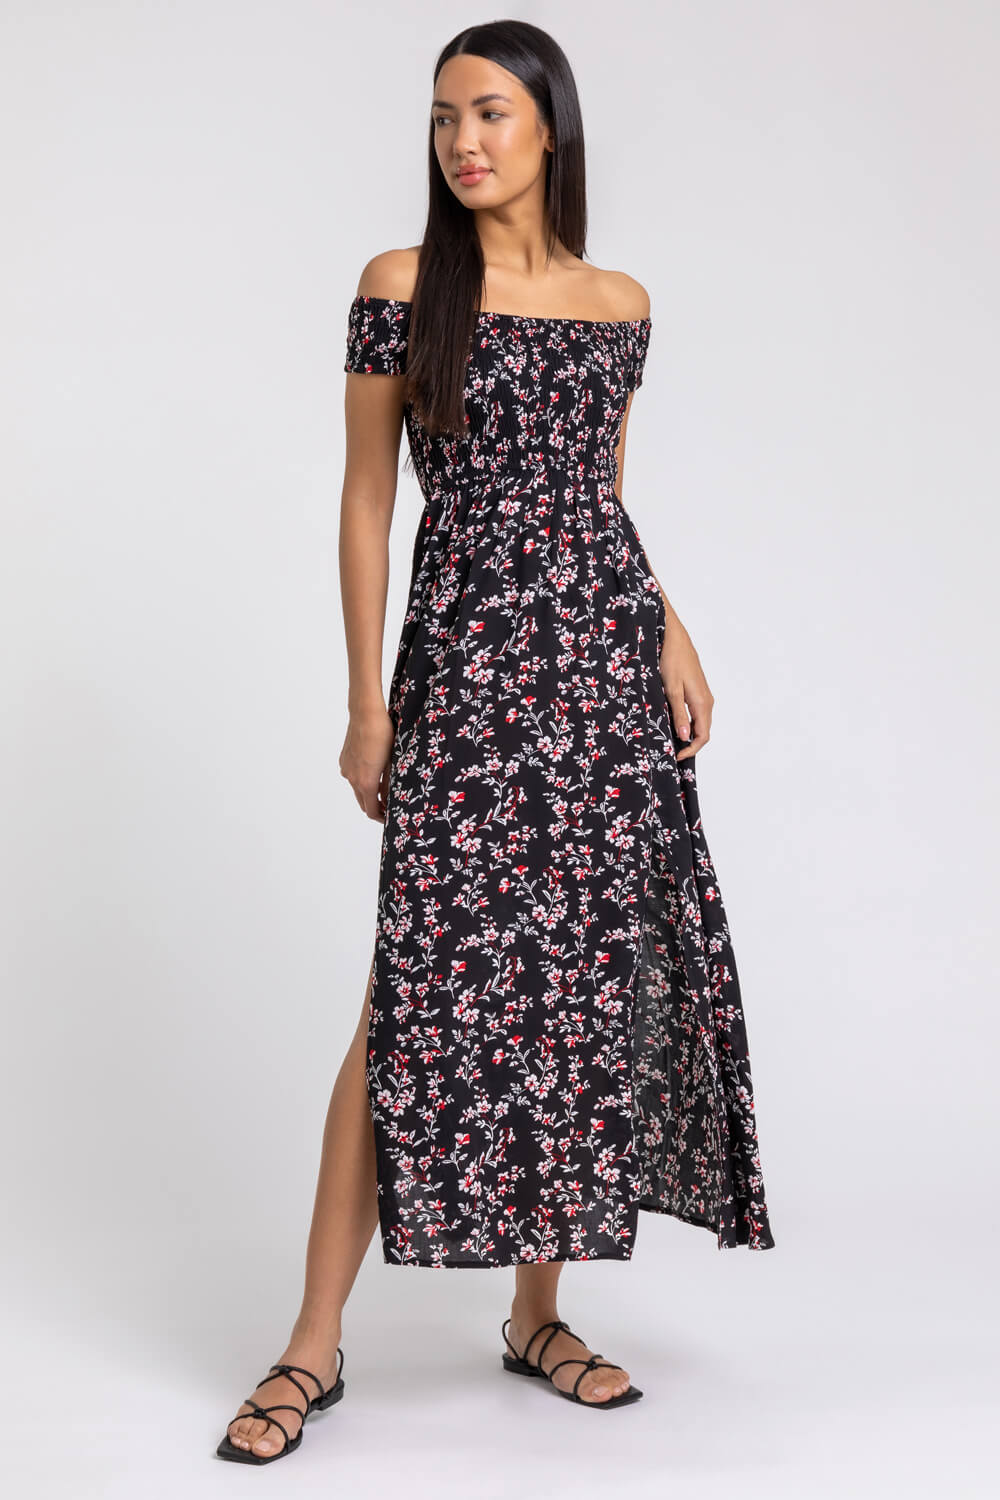 Black Shirred Floral Print Bardot Dress, Image 3 of 4